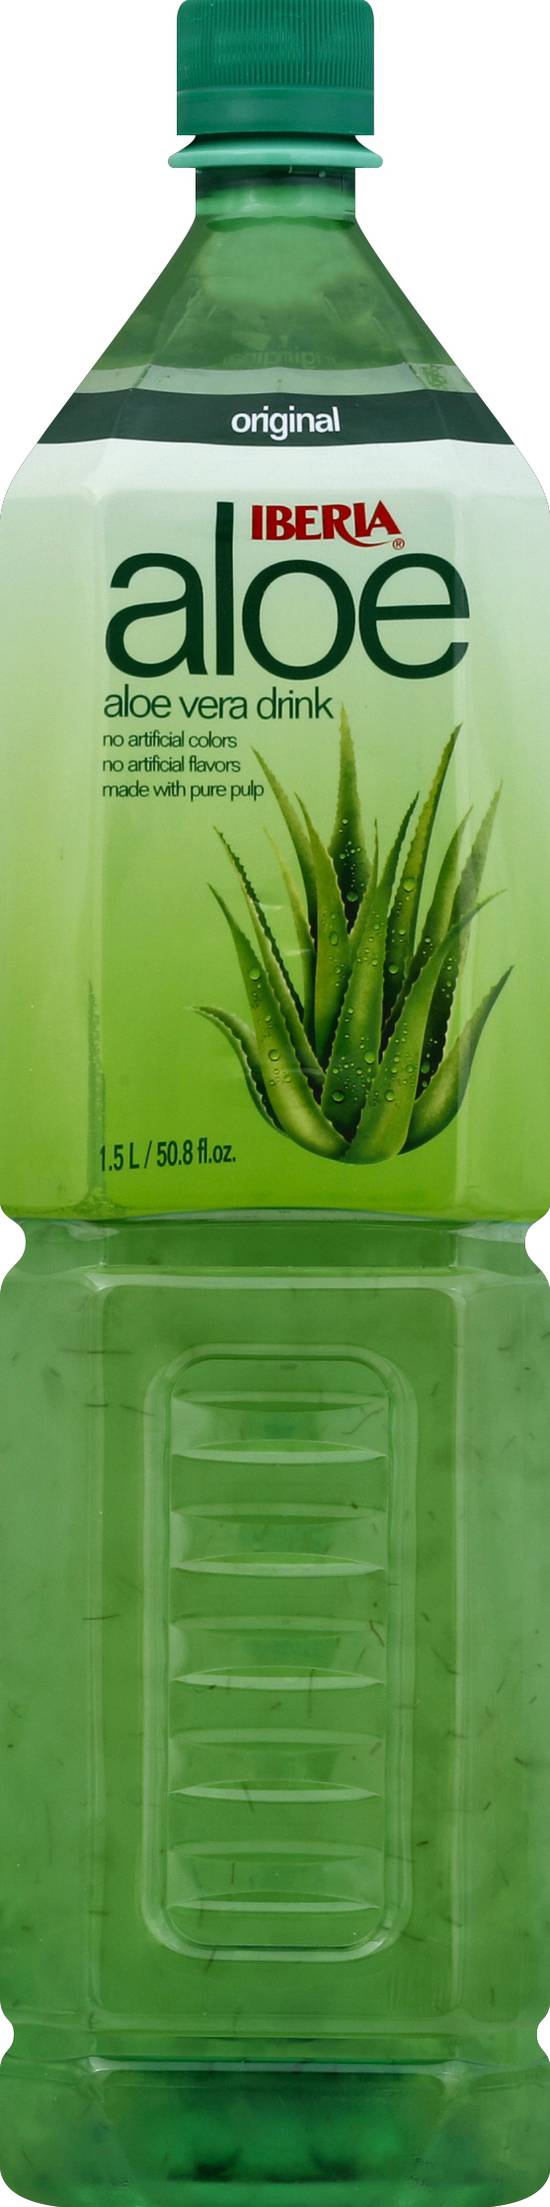 Iberia Aloe Original Vera Drink (50.8 fl oz)